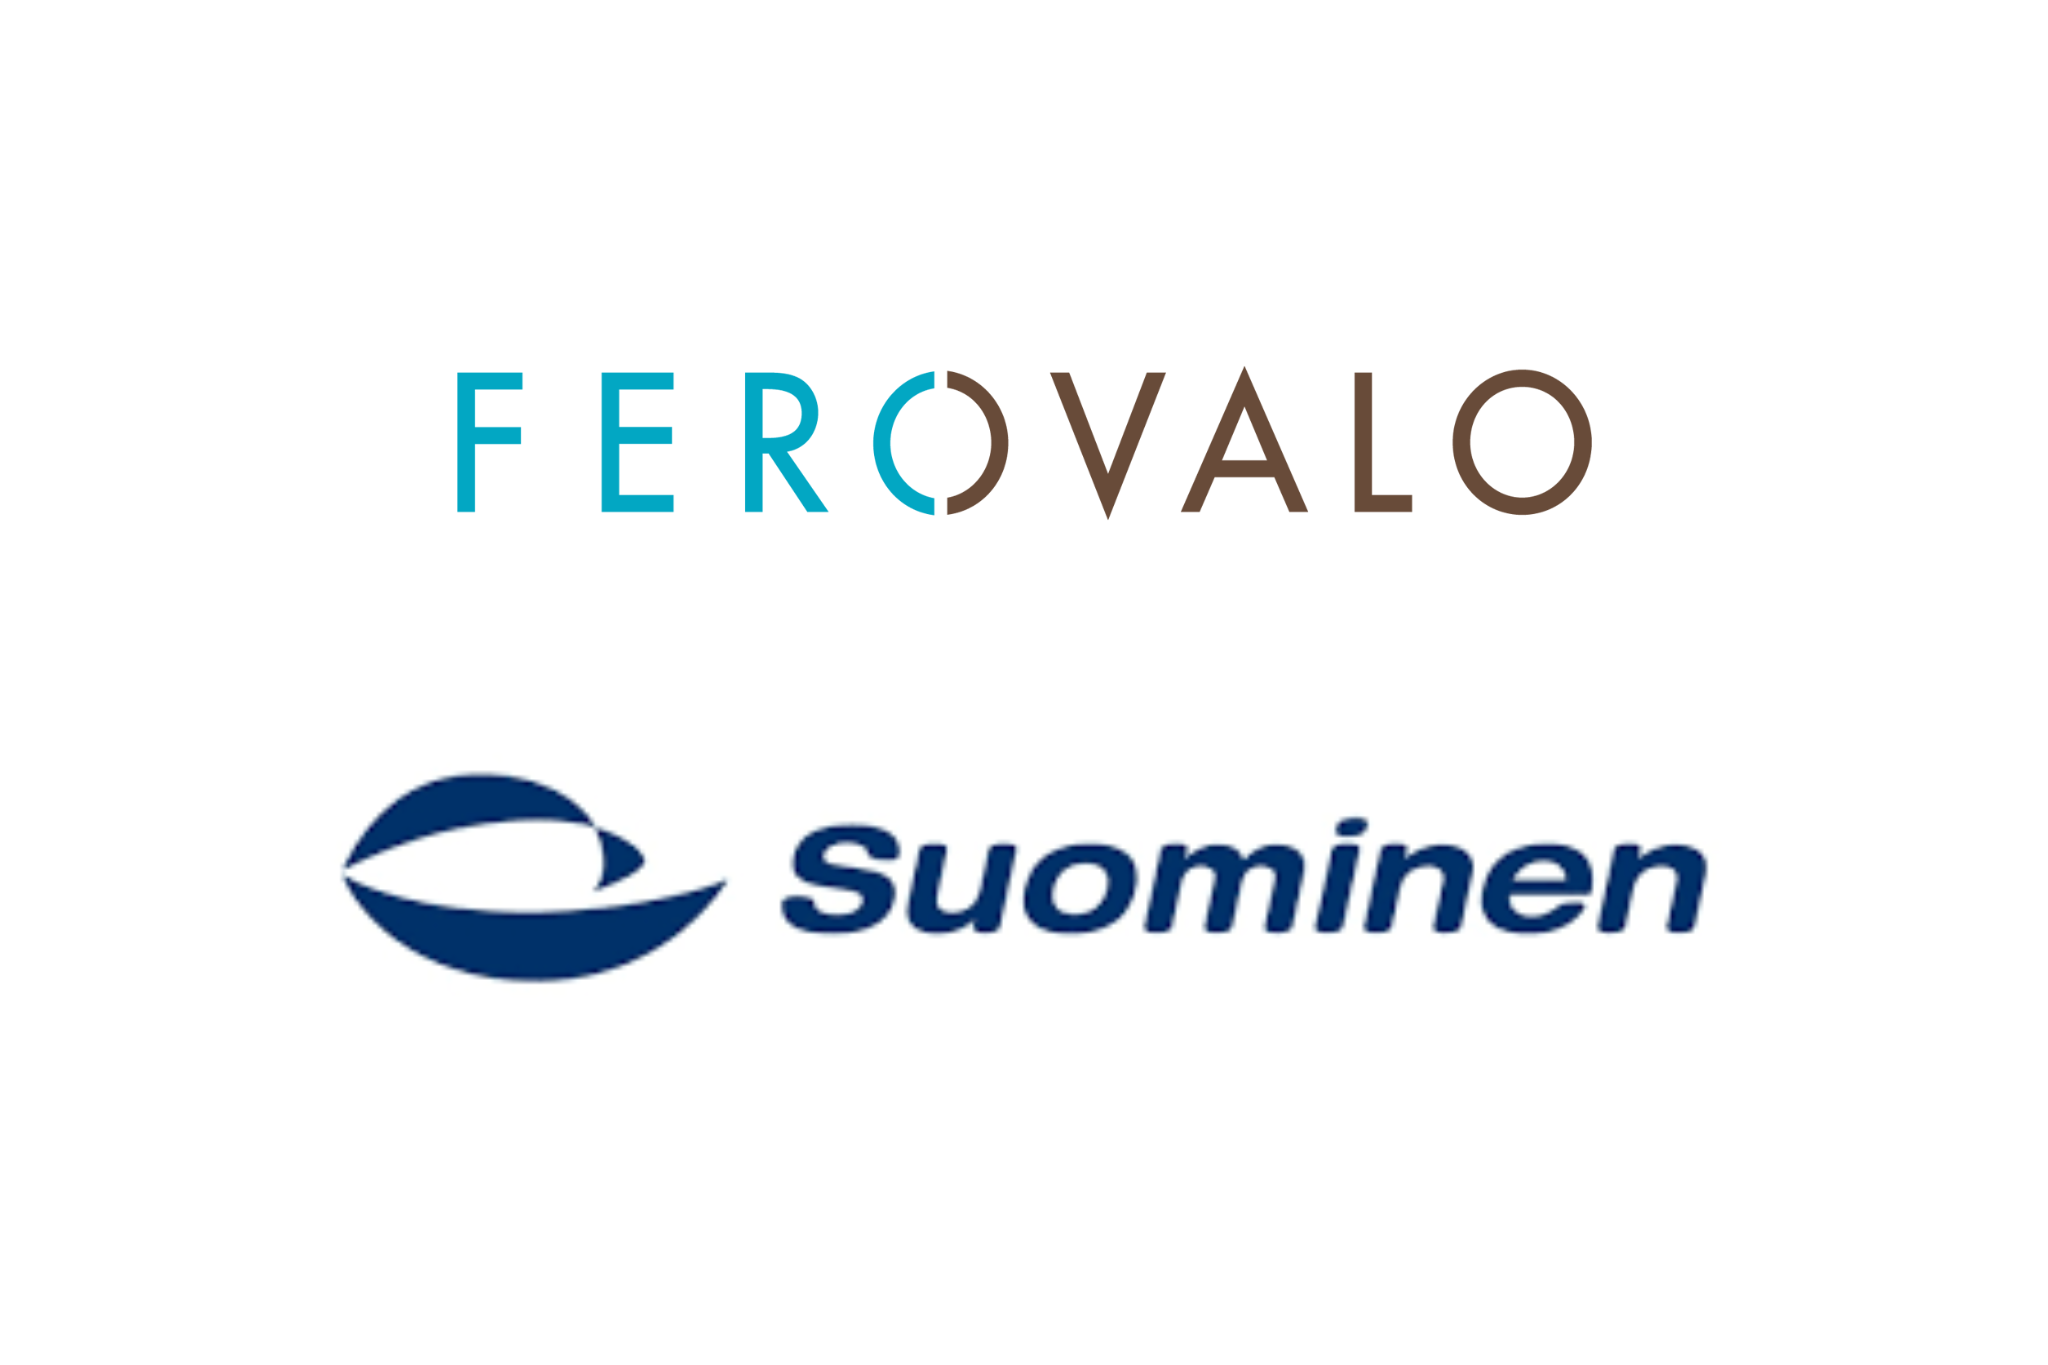 Ferovalo & Suominen logos